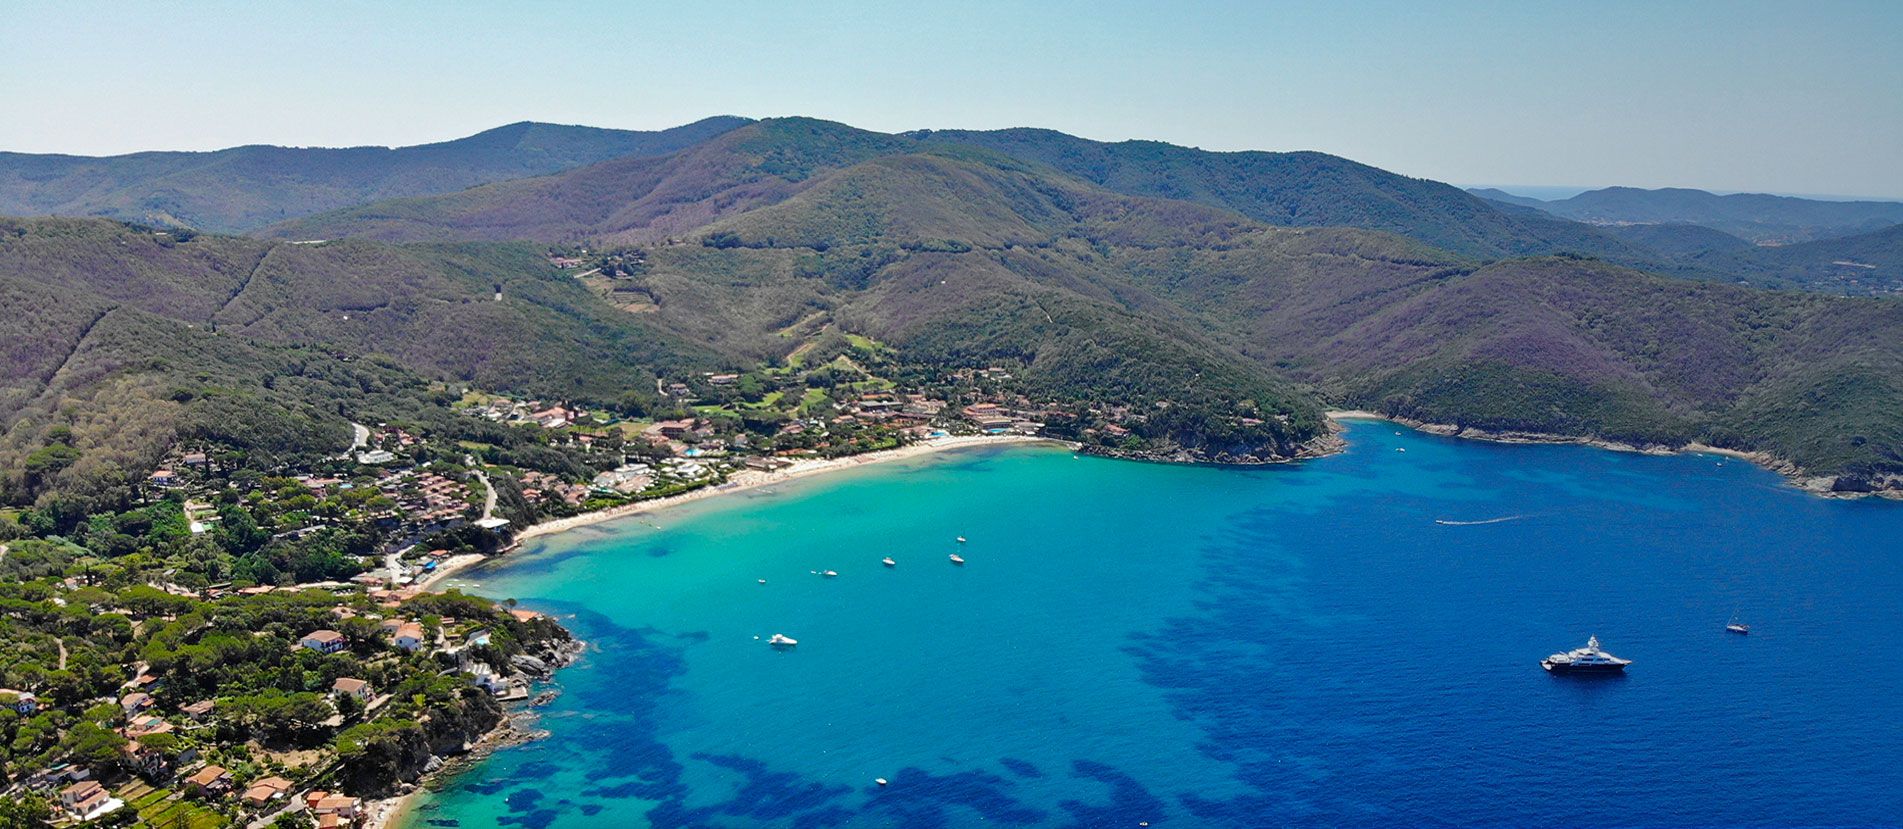 L'Isola d'Elba e le sue bellissime spiagge